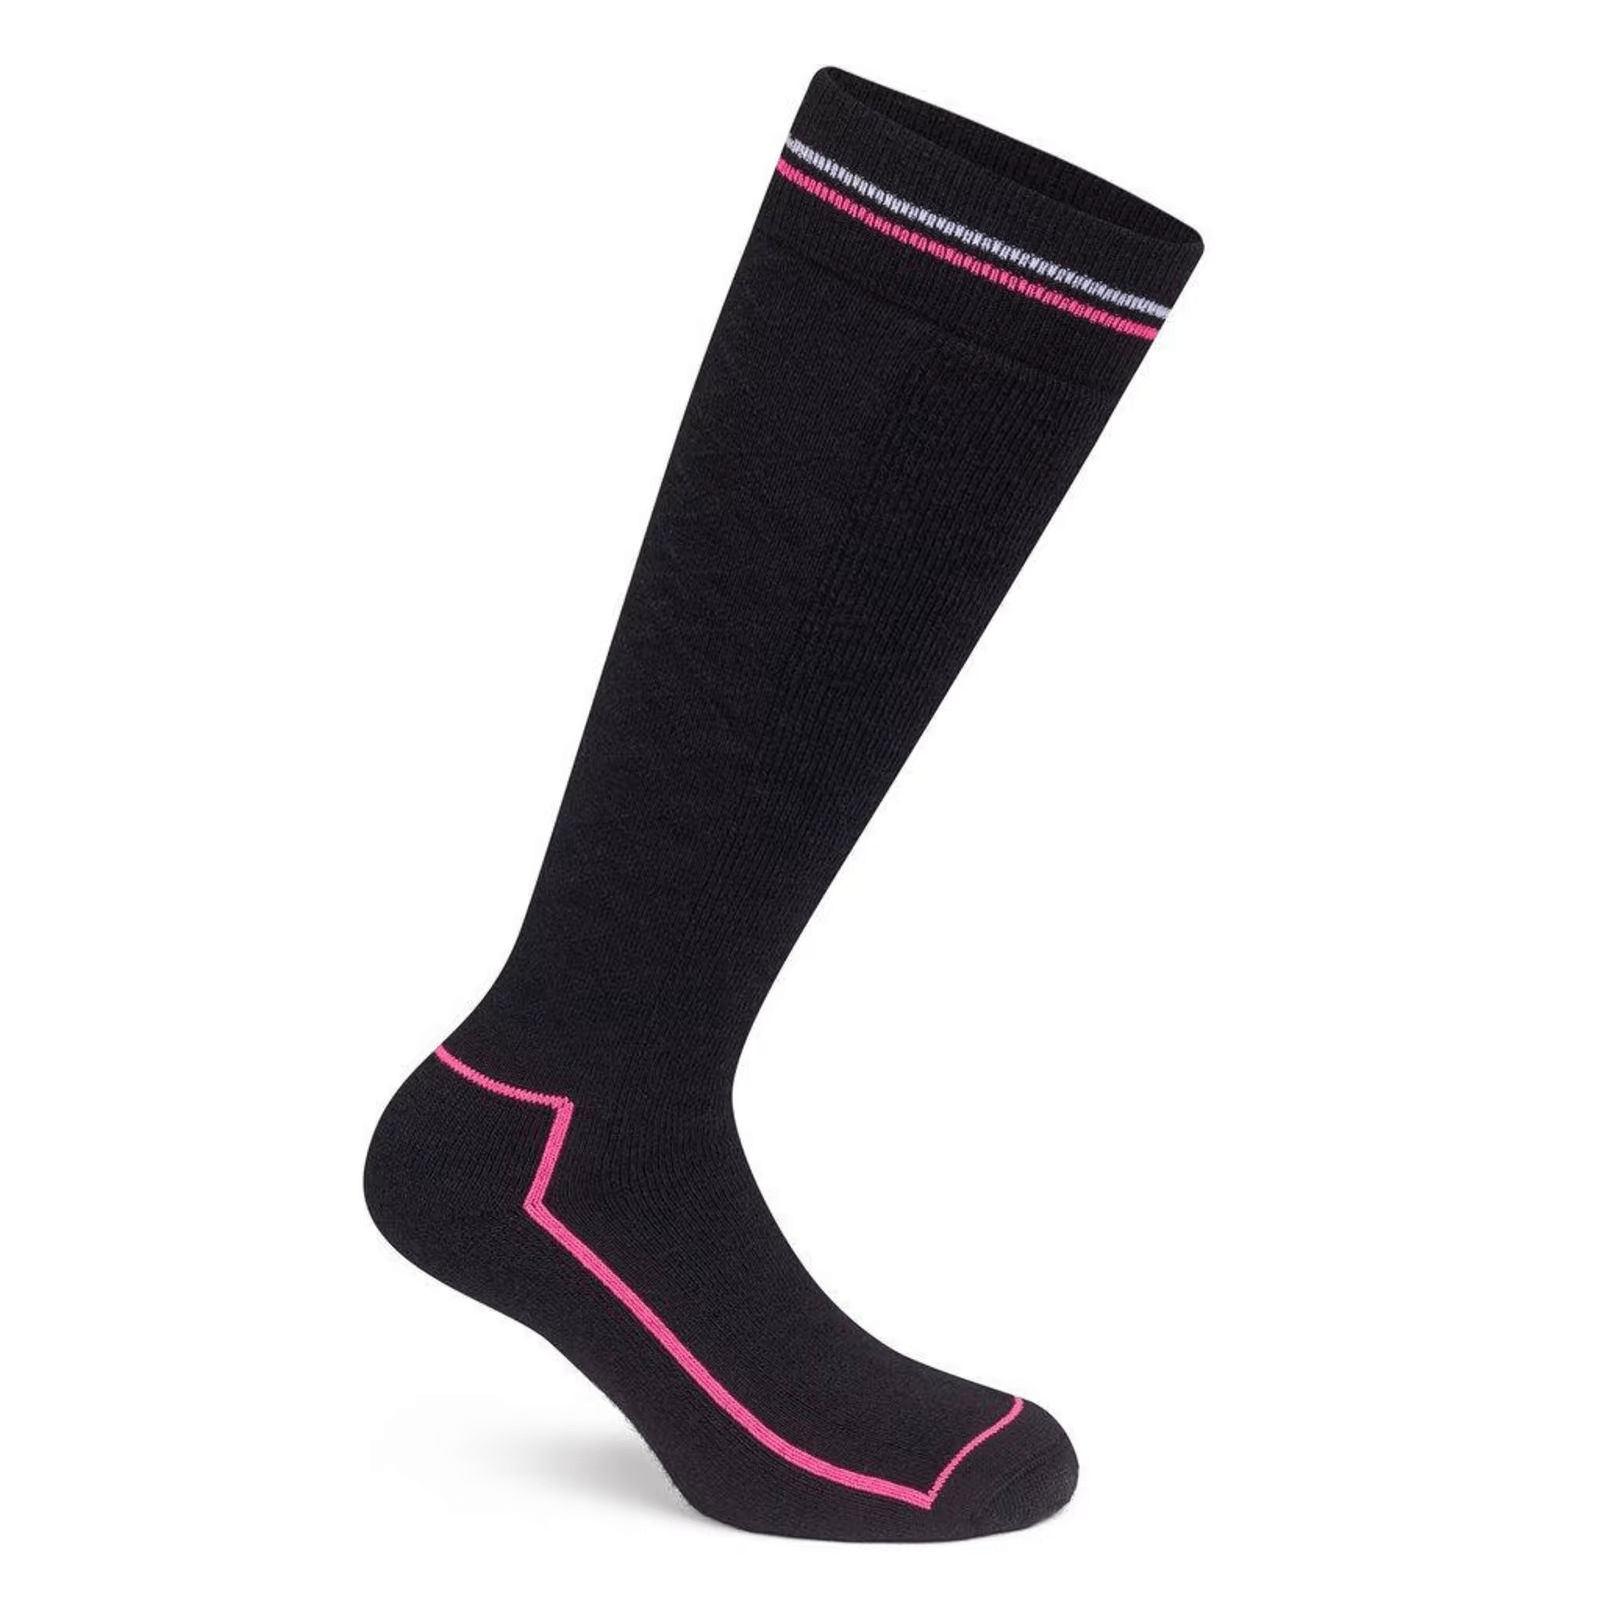 Rapha Deep Winter Socks Black/High-Vis Pink / S Apparel - Clothing - Socks